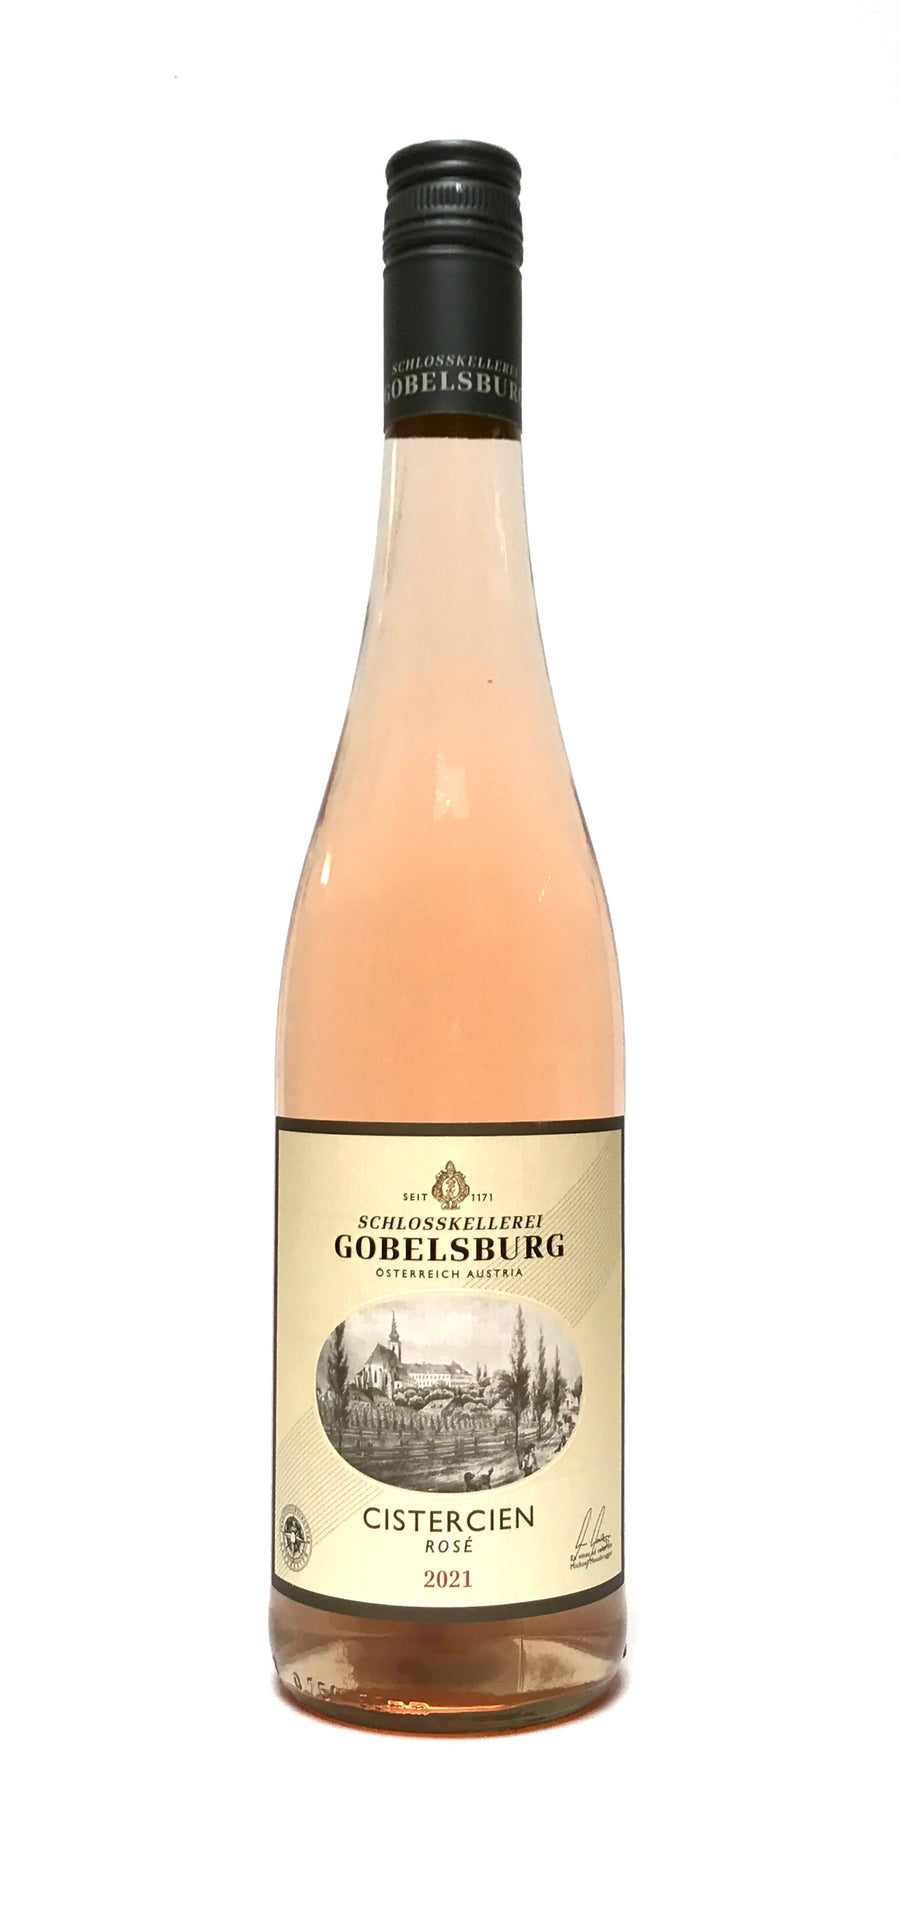 Gobelsburg 2021 Cistercian Rosé